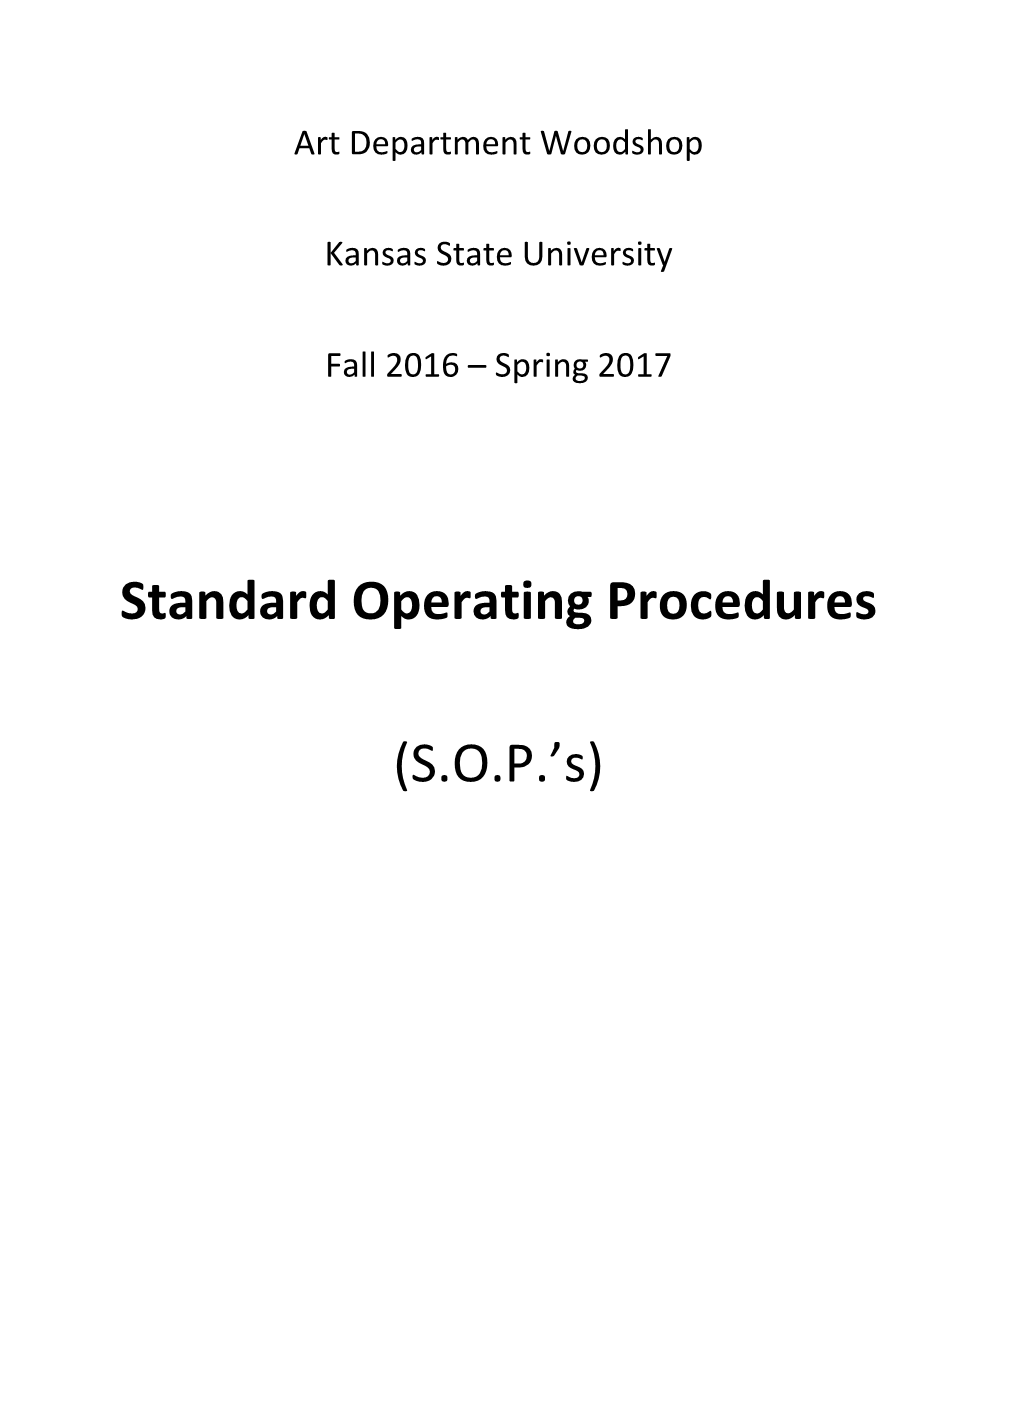 Standard Operating Procedures (S.O.P.'S)